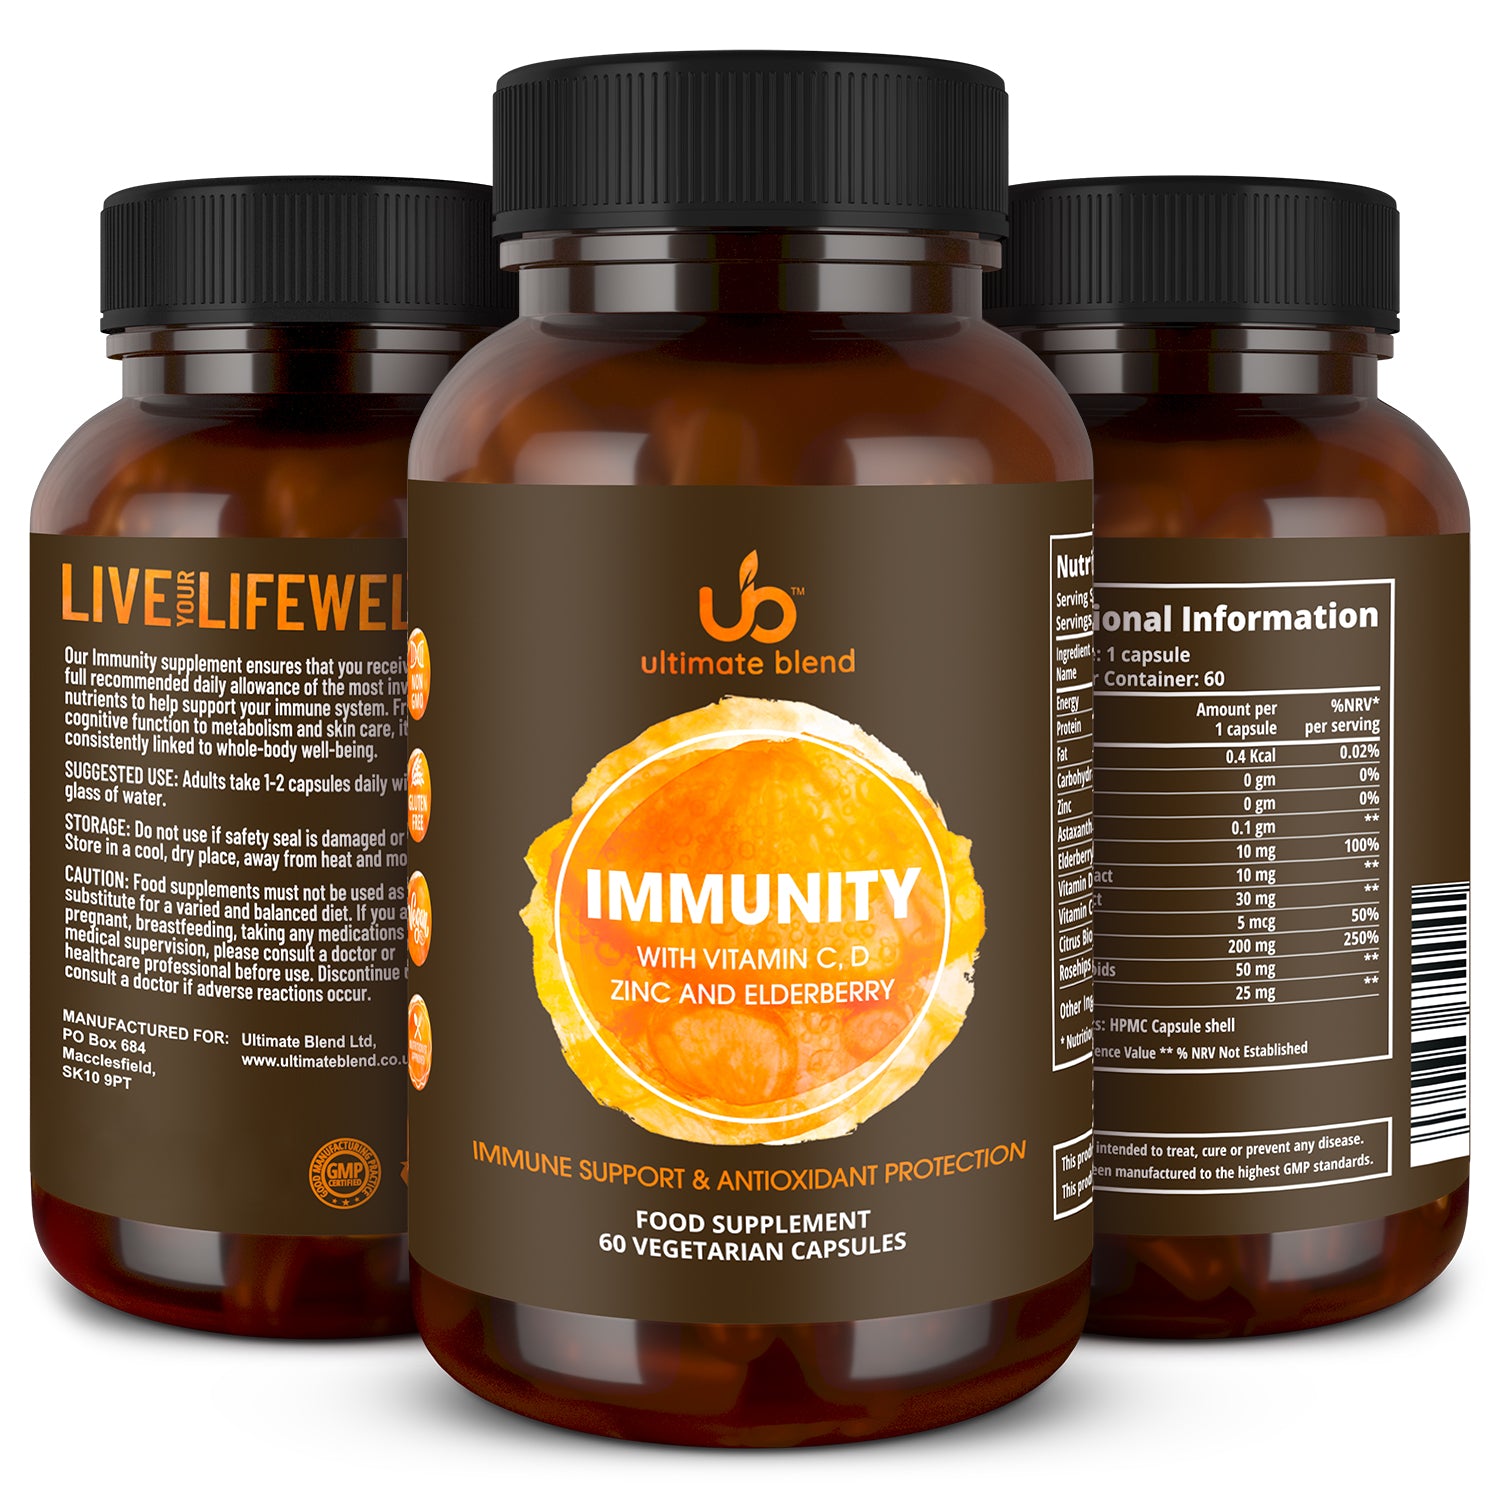 Immunity with Vitamin C, D, Zinc and Elderberry